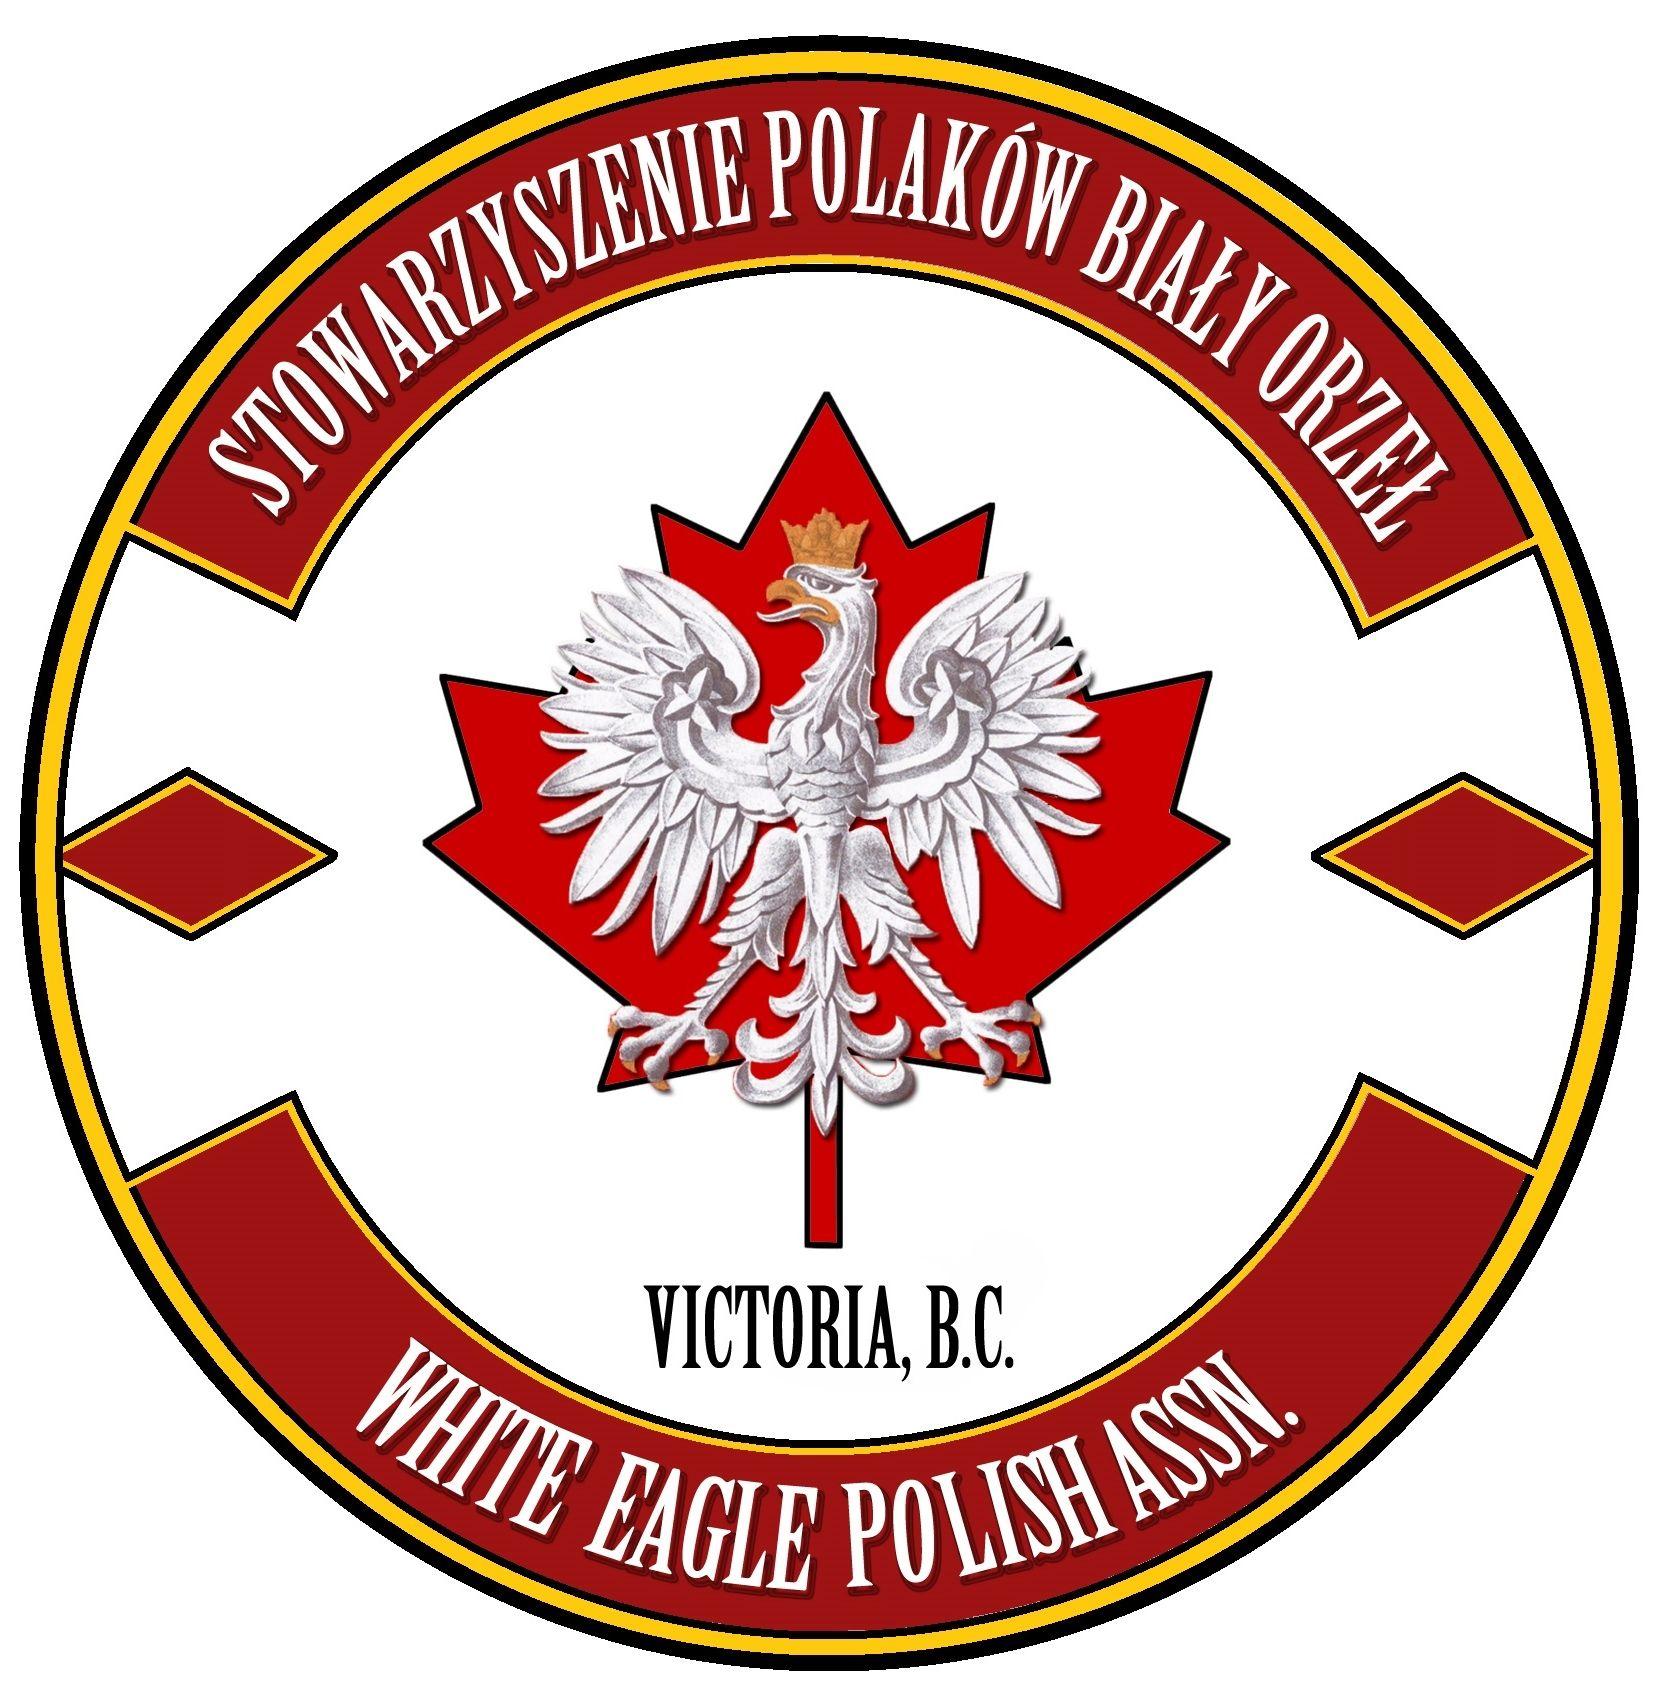 Red and White Eagle Logo - White Eagle Polish Hall | Victoria Polish Community Hall